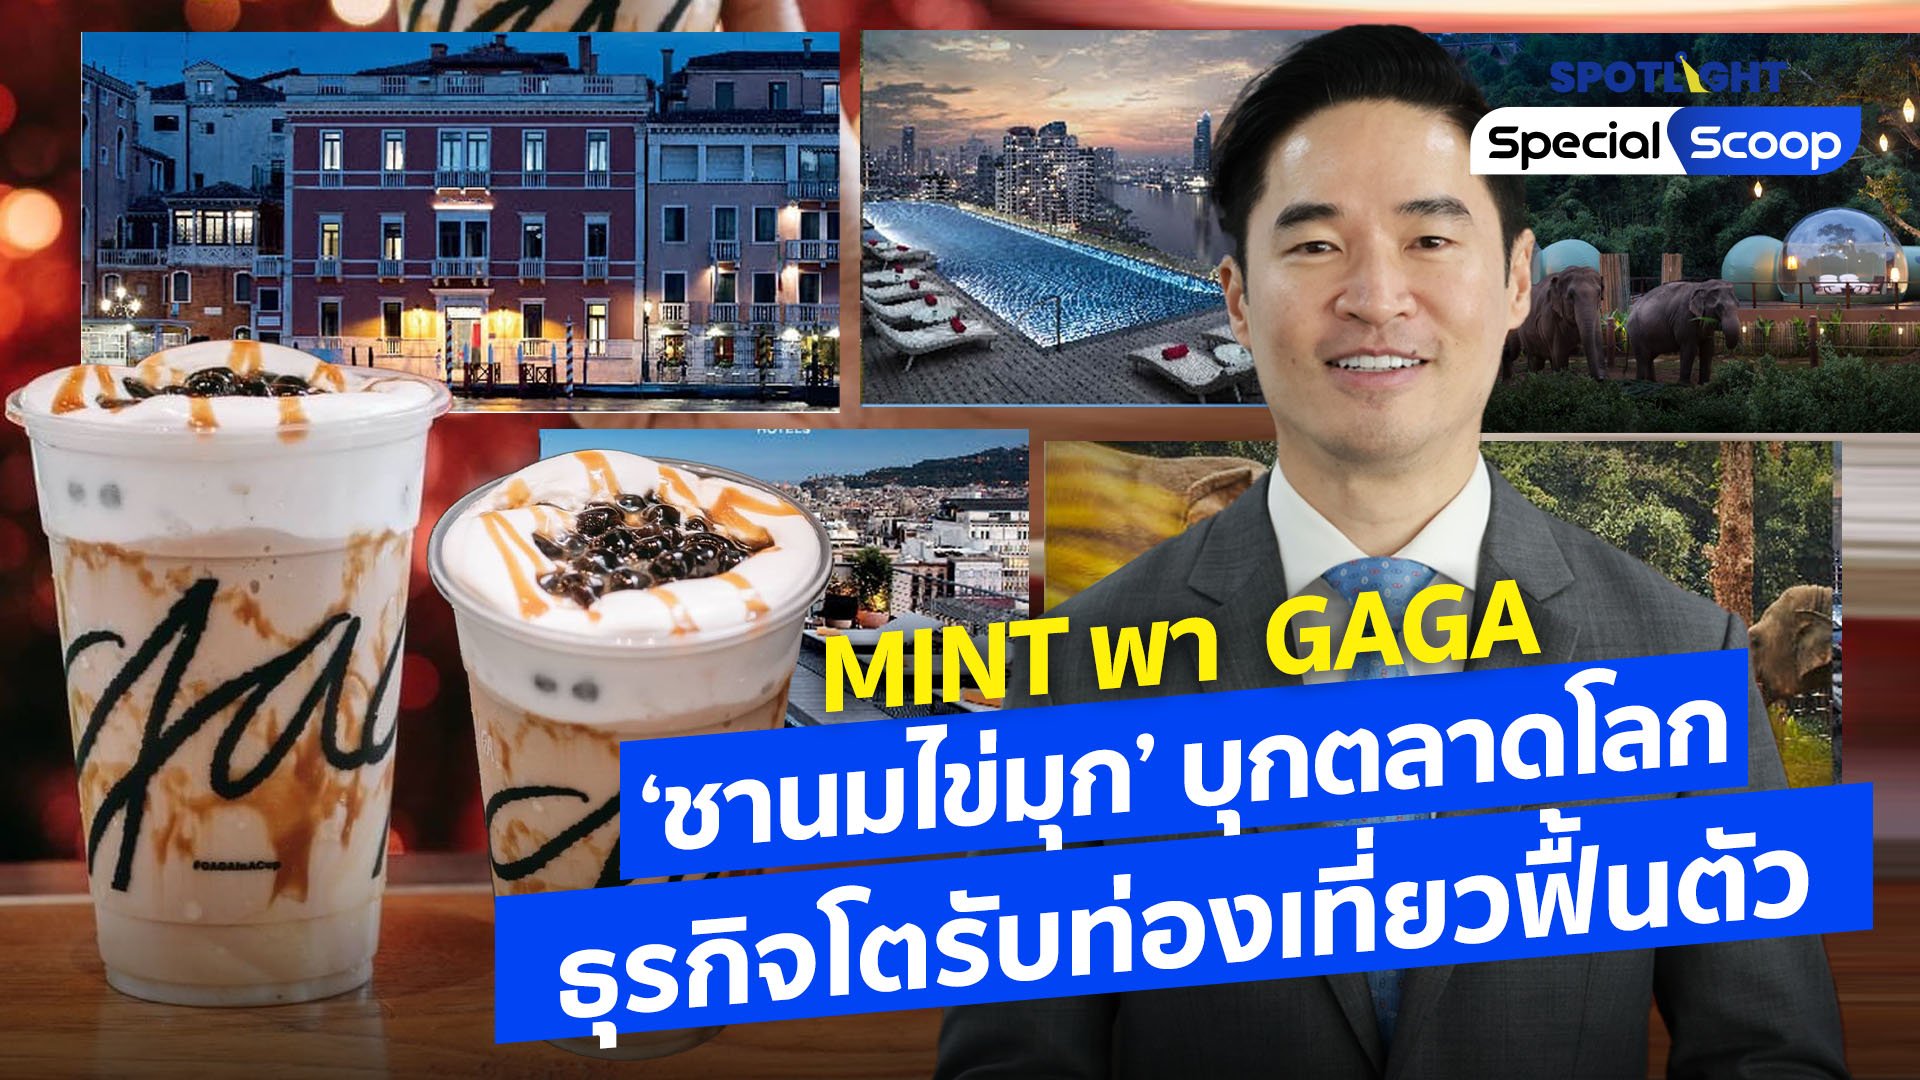 MINT พา  GAGA  ‘ชานมไข่มุก’ บุกตลาดโลกธุรกิจโตรับท่องเที่ยวฟื้นตัว | Spotlight | 30 ม.ค. 66 | AMARIN TVHD34